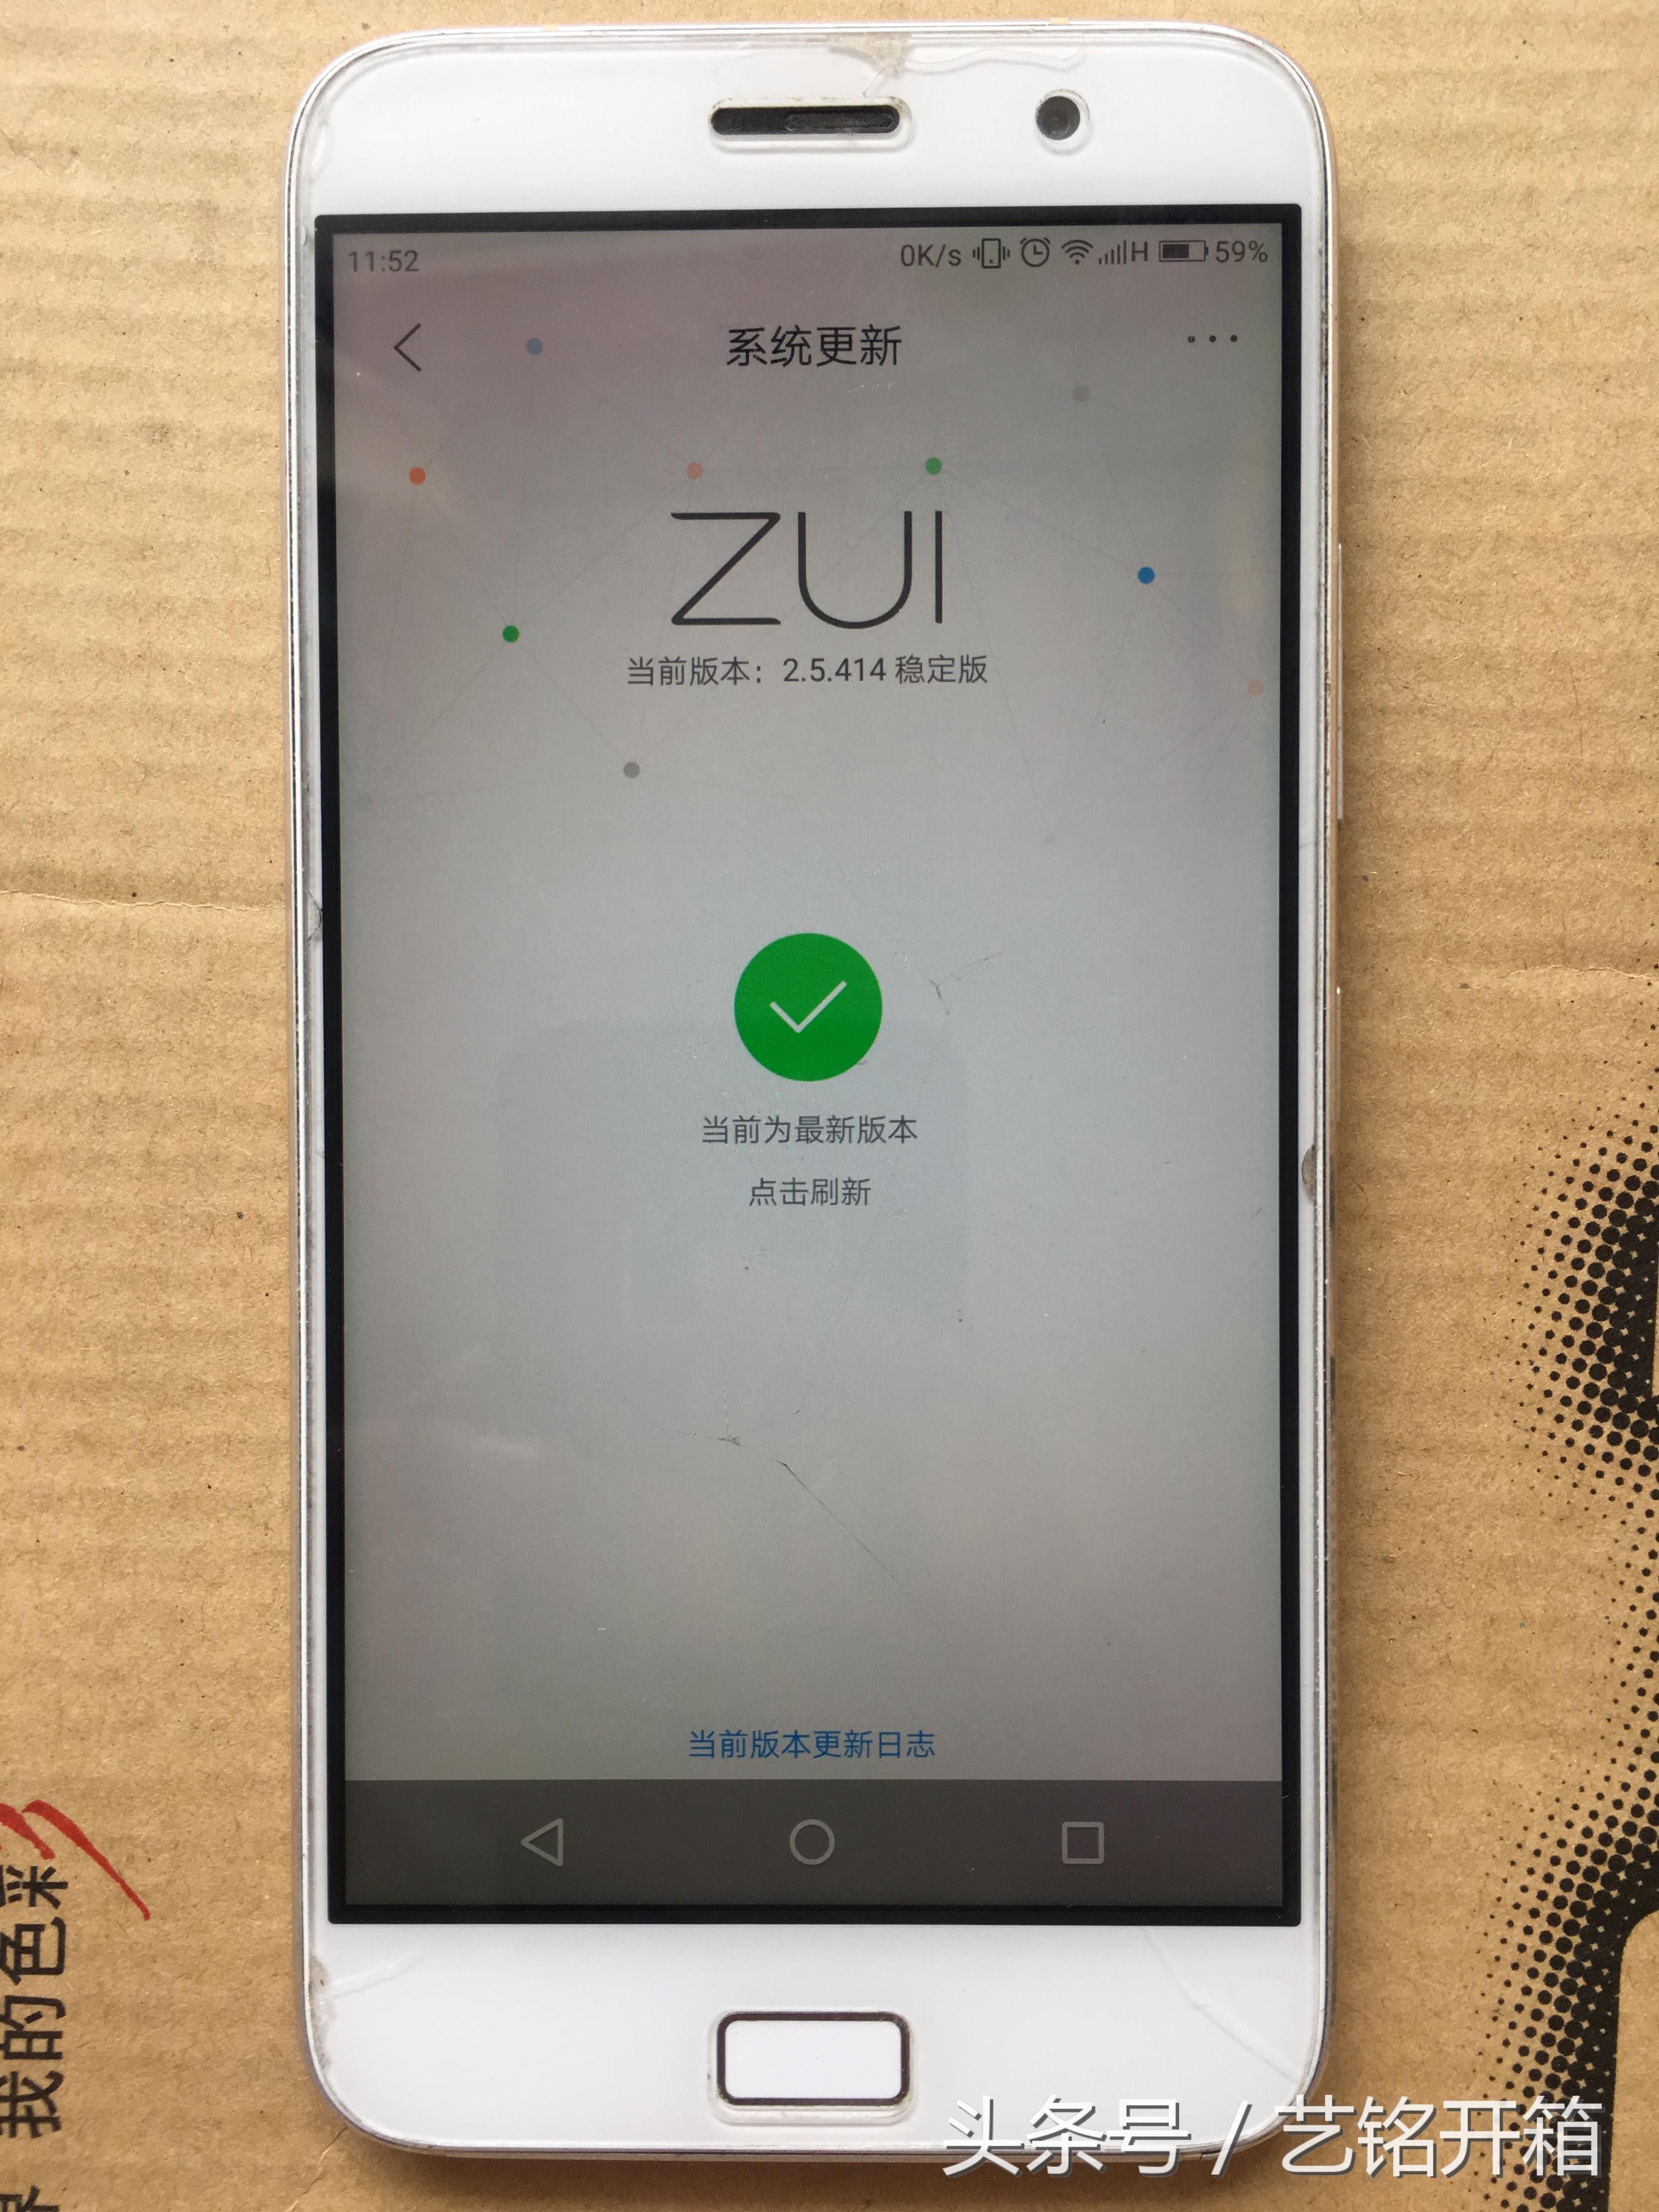 zuk z1手机评测：性能强悍，值得购买吗？